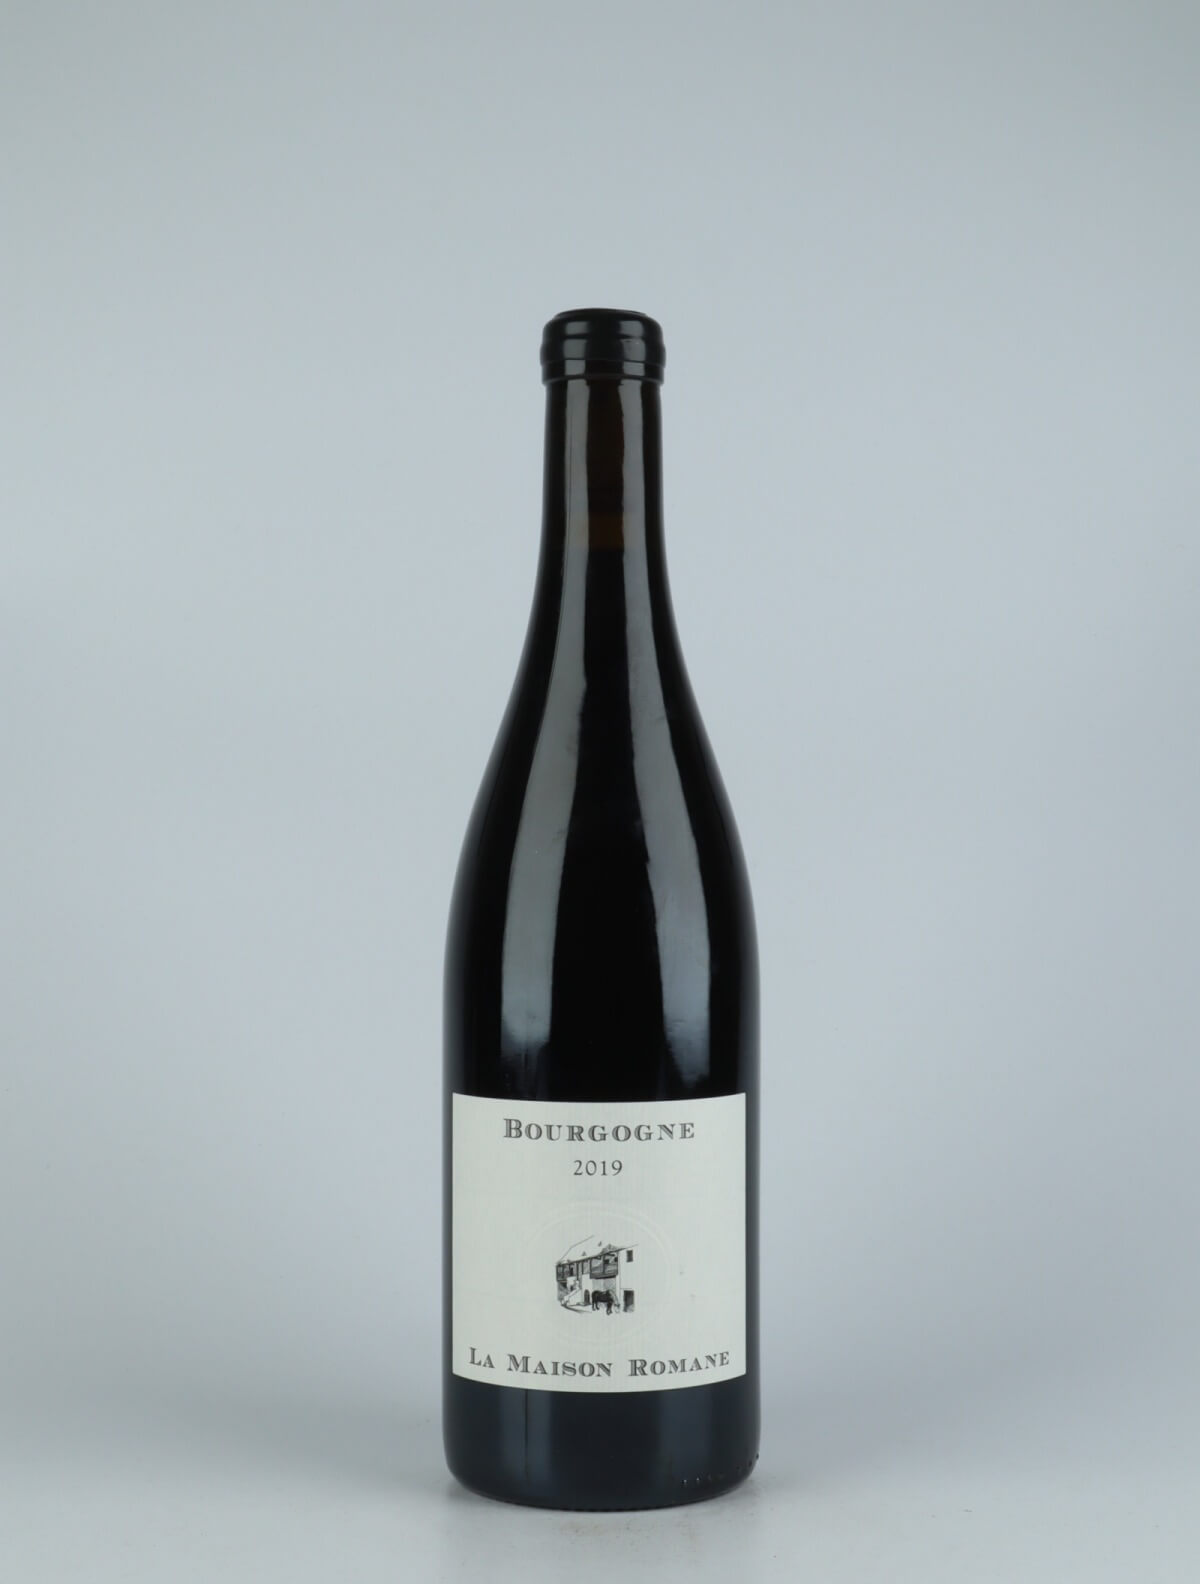 A bottle 2019 Bourgogne Rouge Red wine from La Maison Romane, Burgundy in France